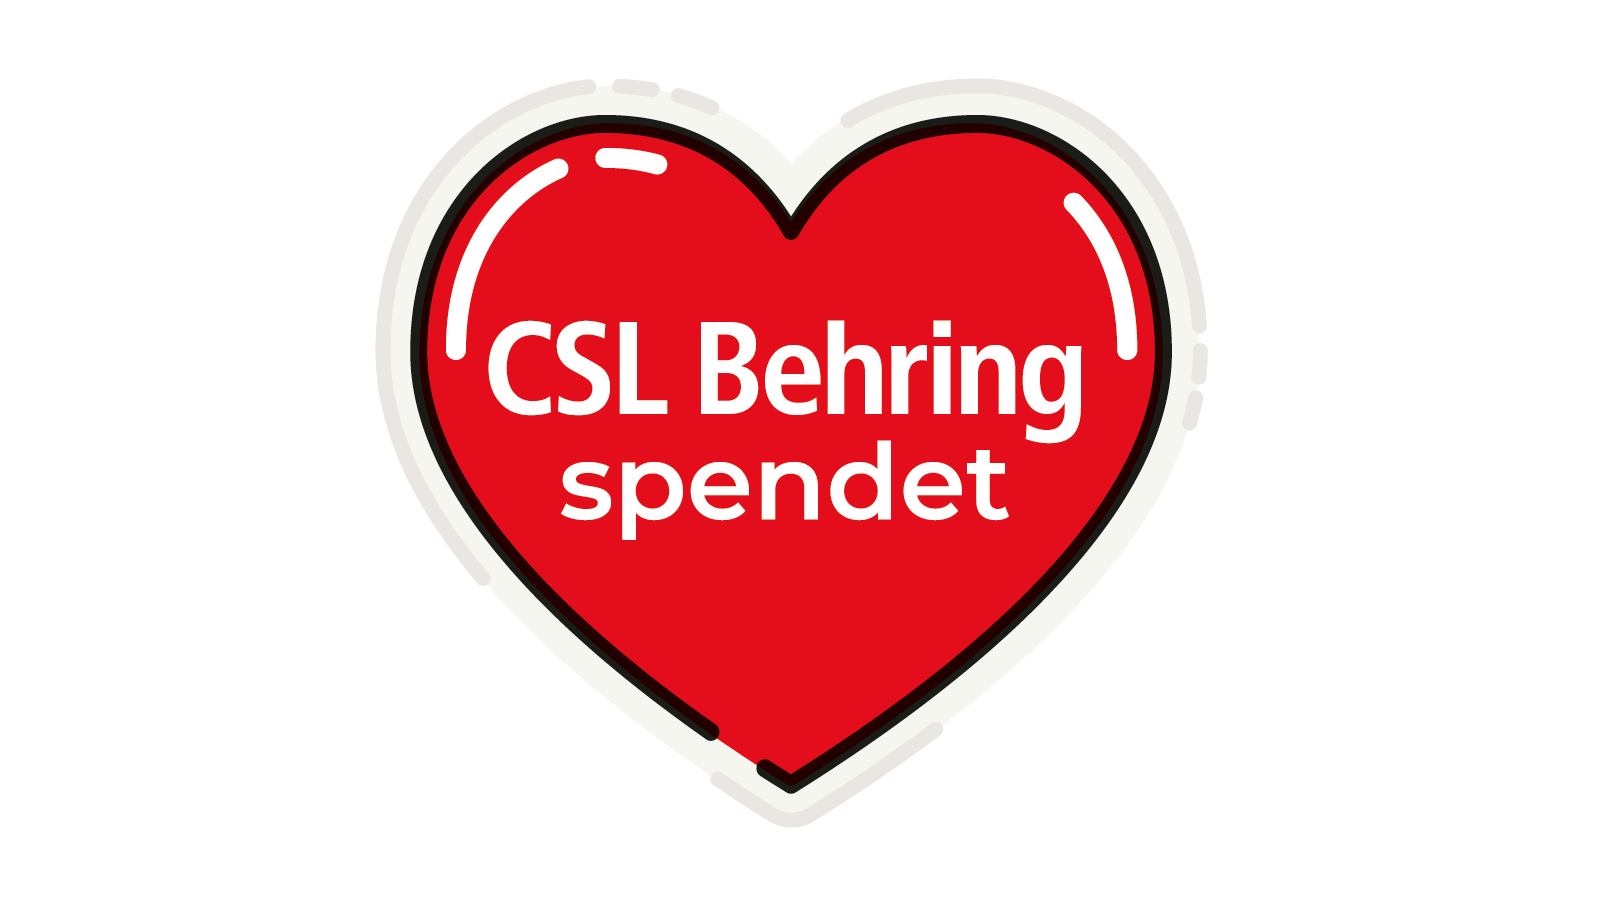 CSL Behring donates